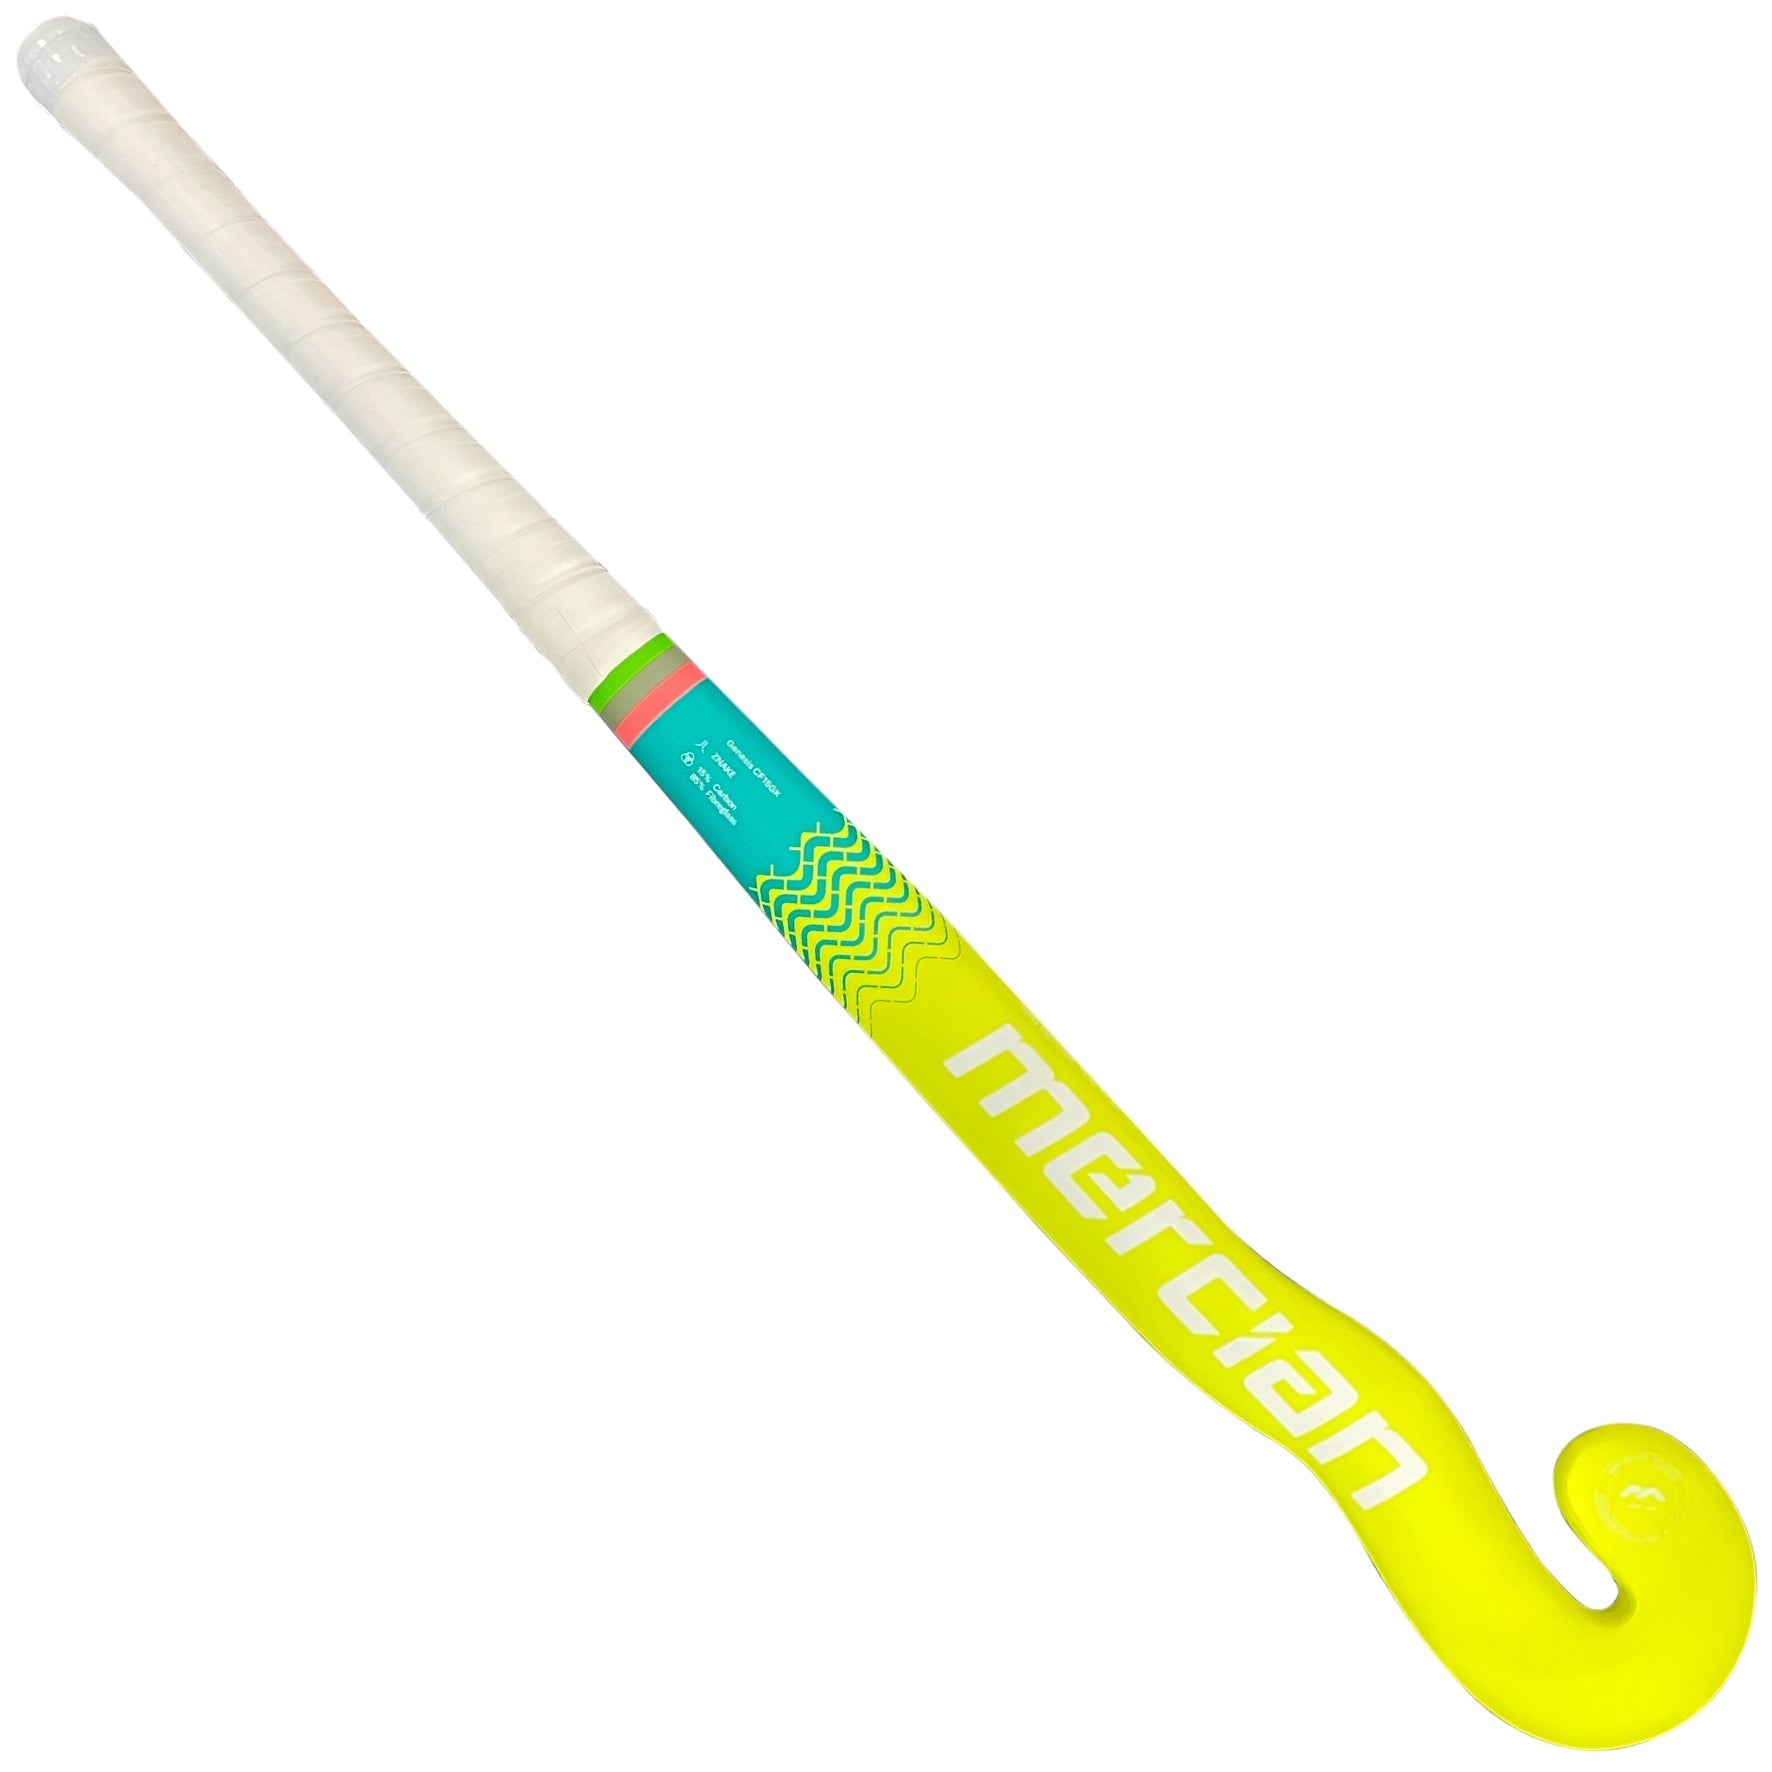 Mercian Genesis CF15 GK Znake 32" Junior Hockey Stick-Bruntsfield Sports Online